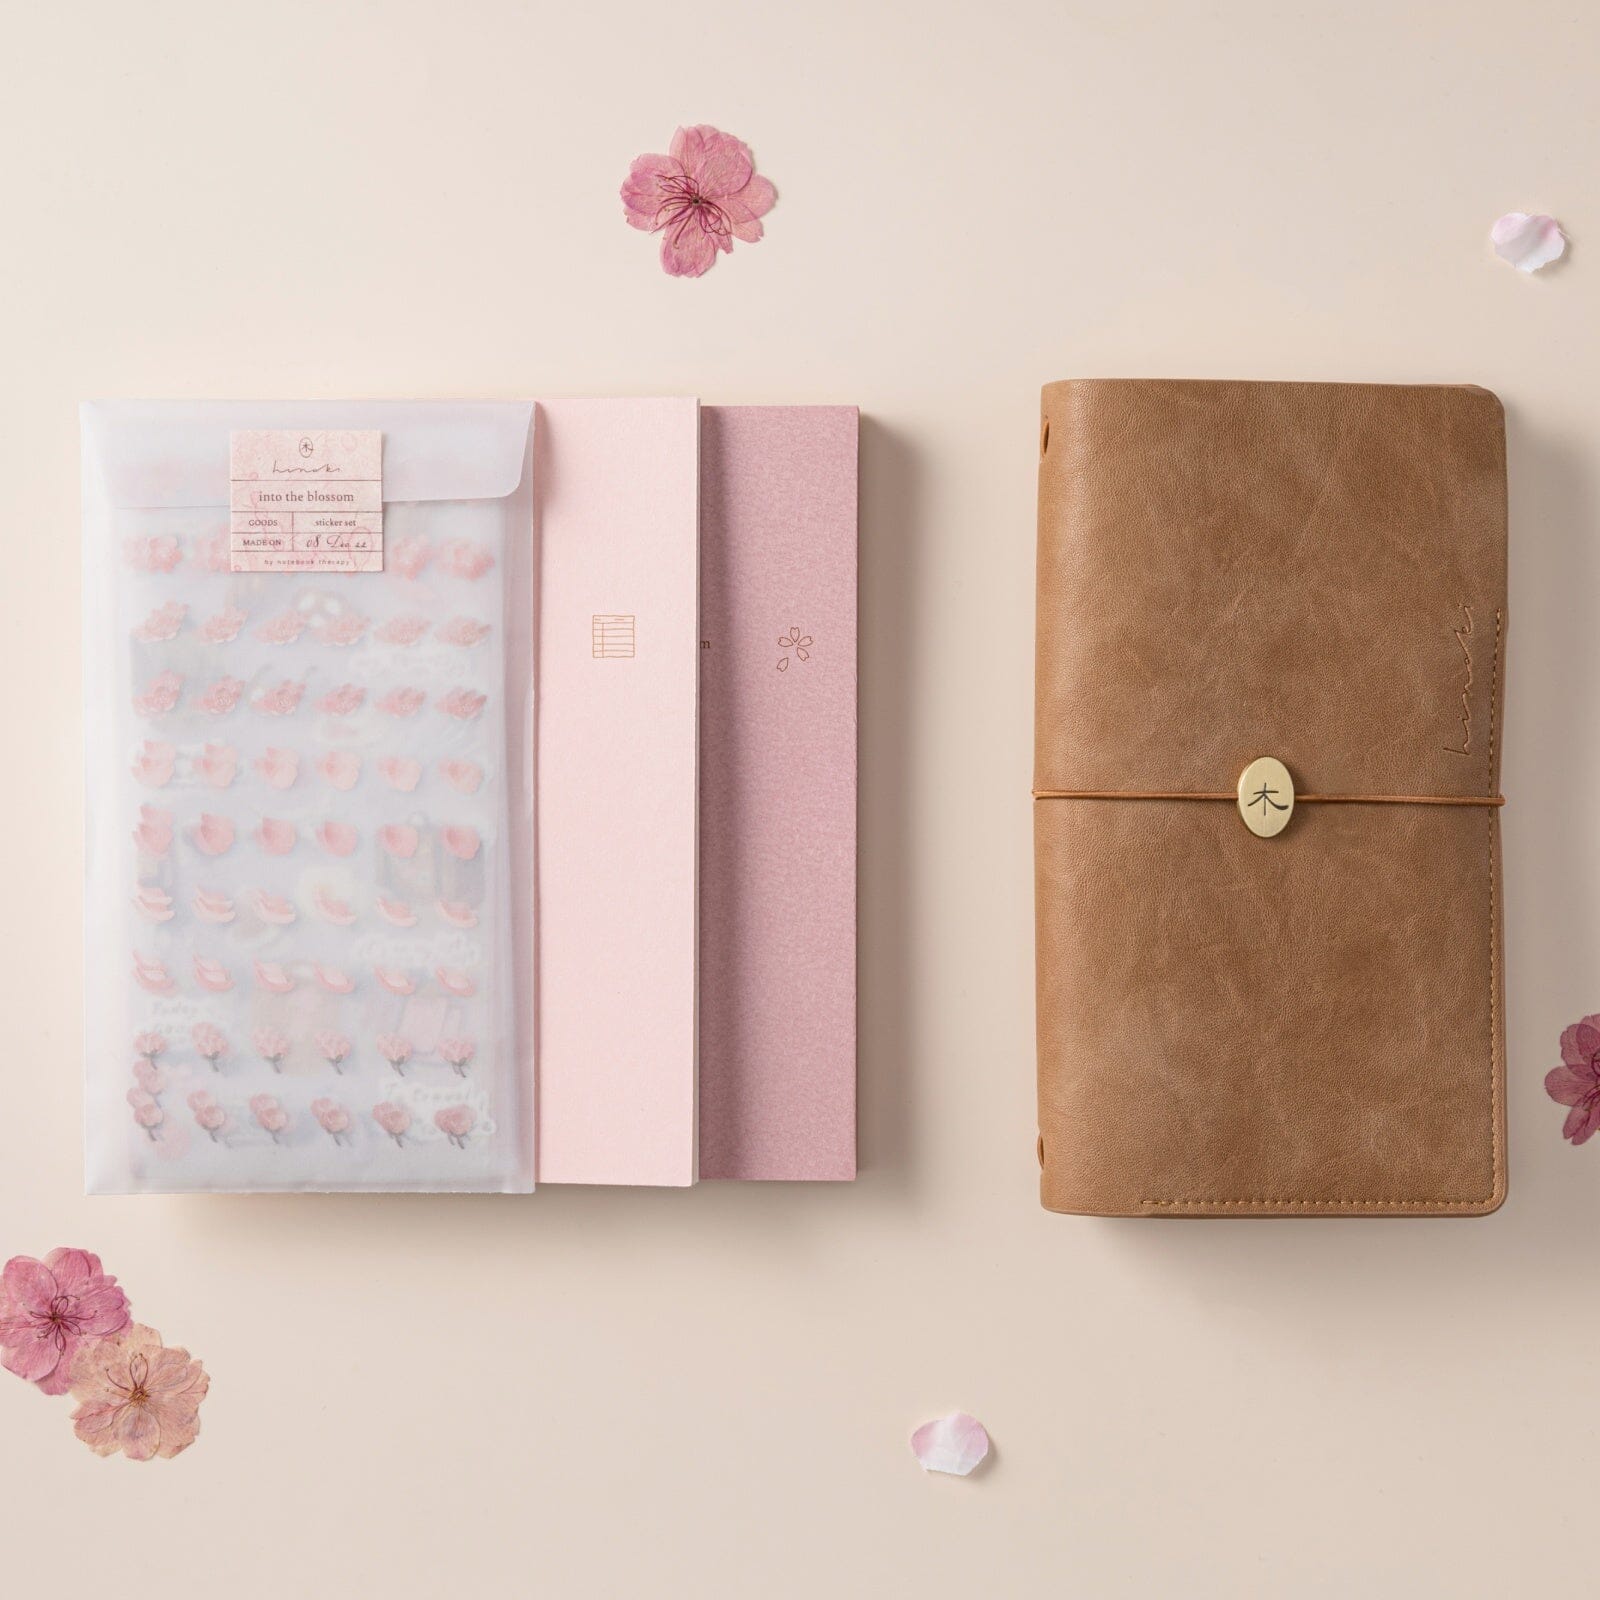 Flatlay od Hinoki into the blossom mixed insert + sticker set with travel notebook